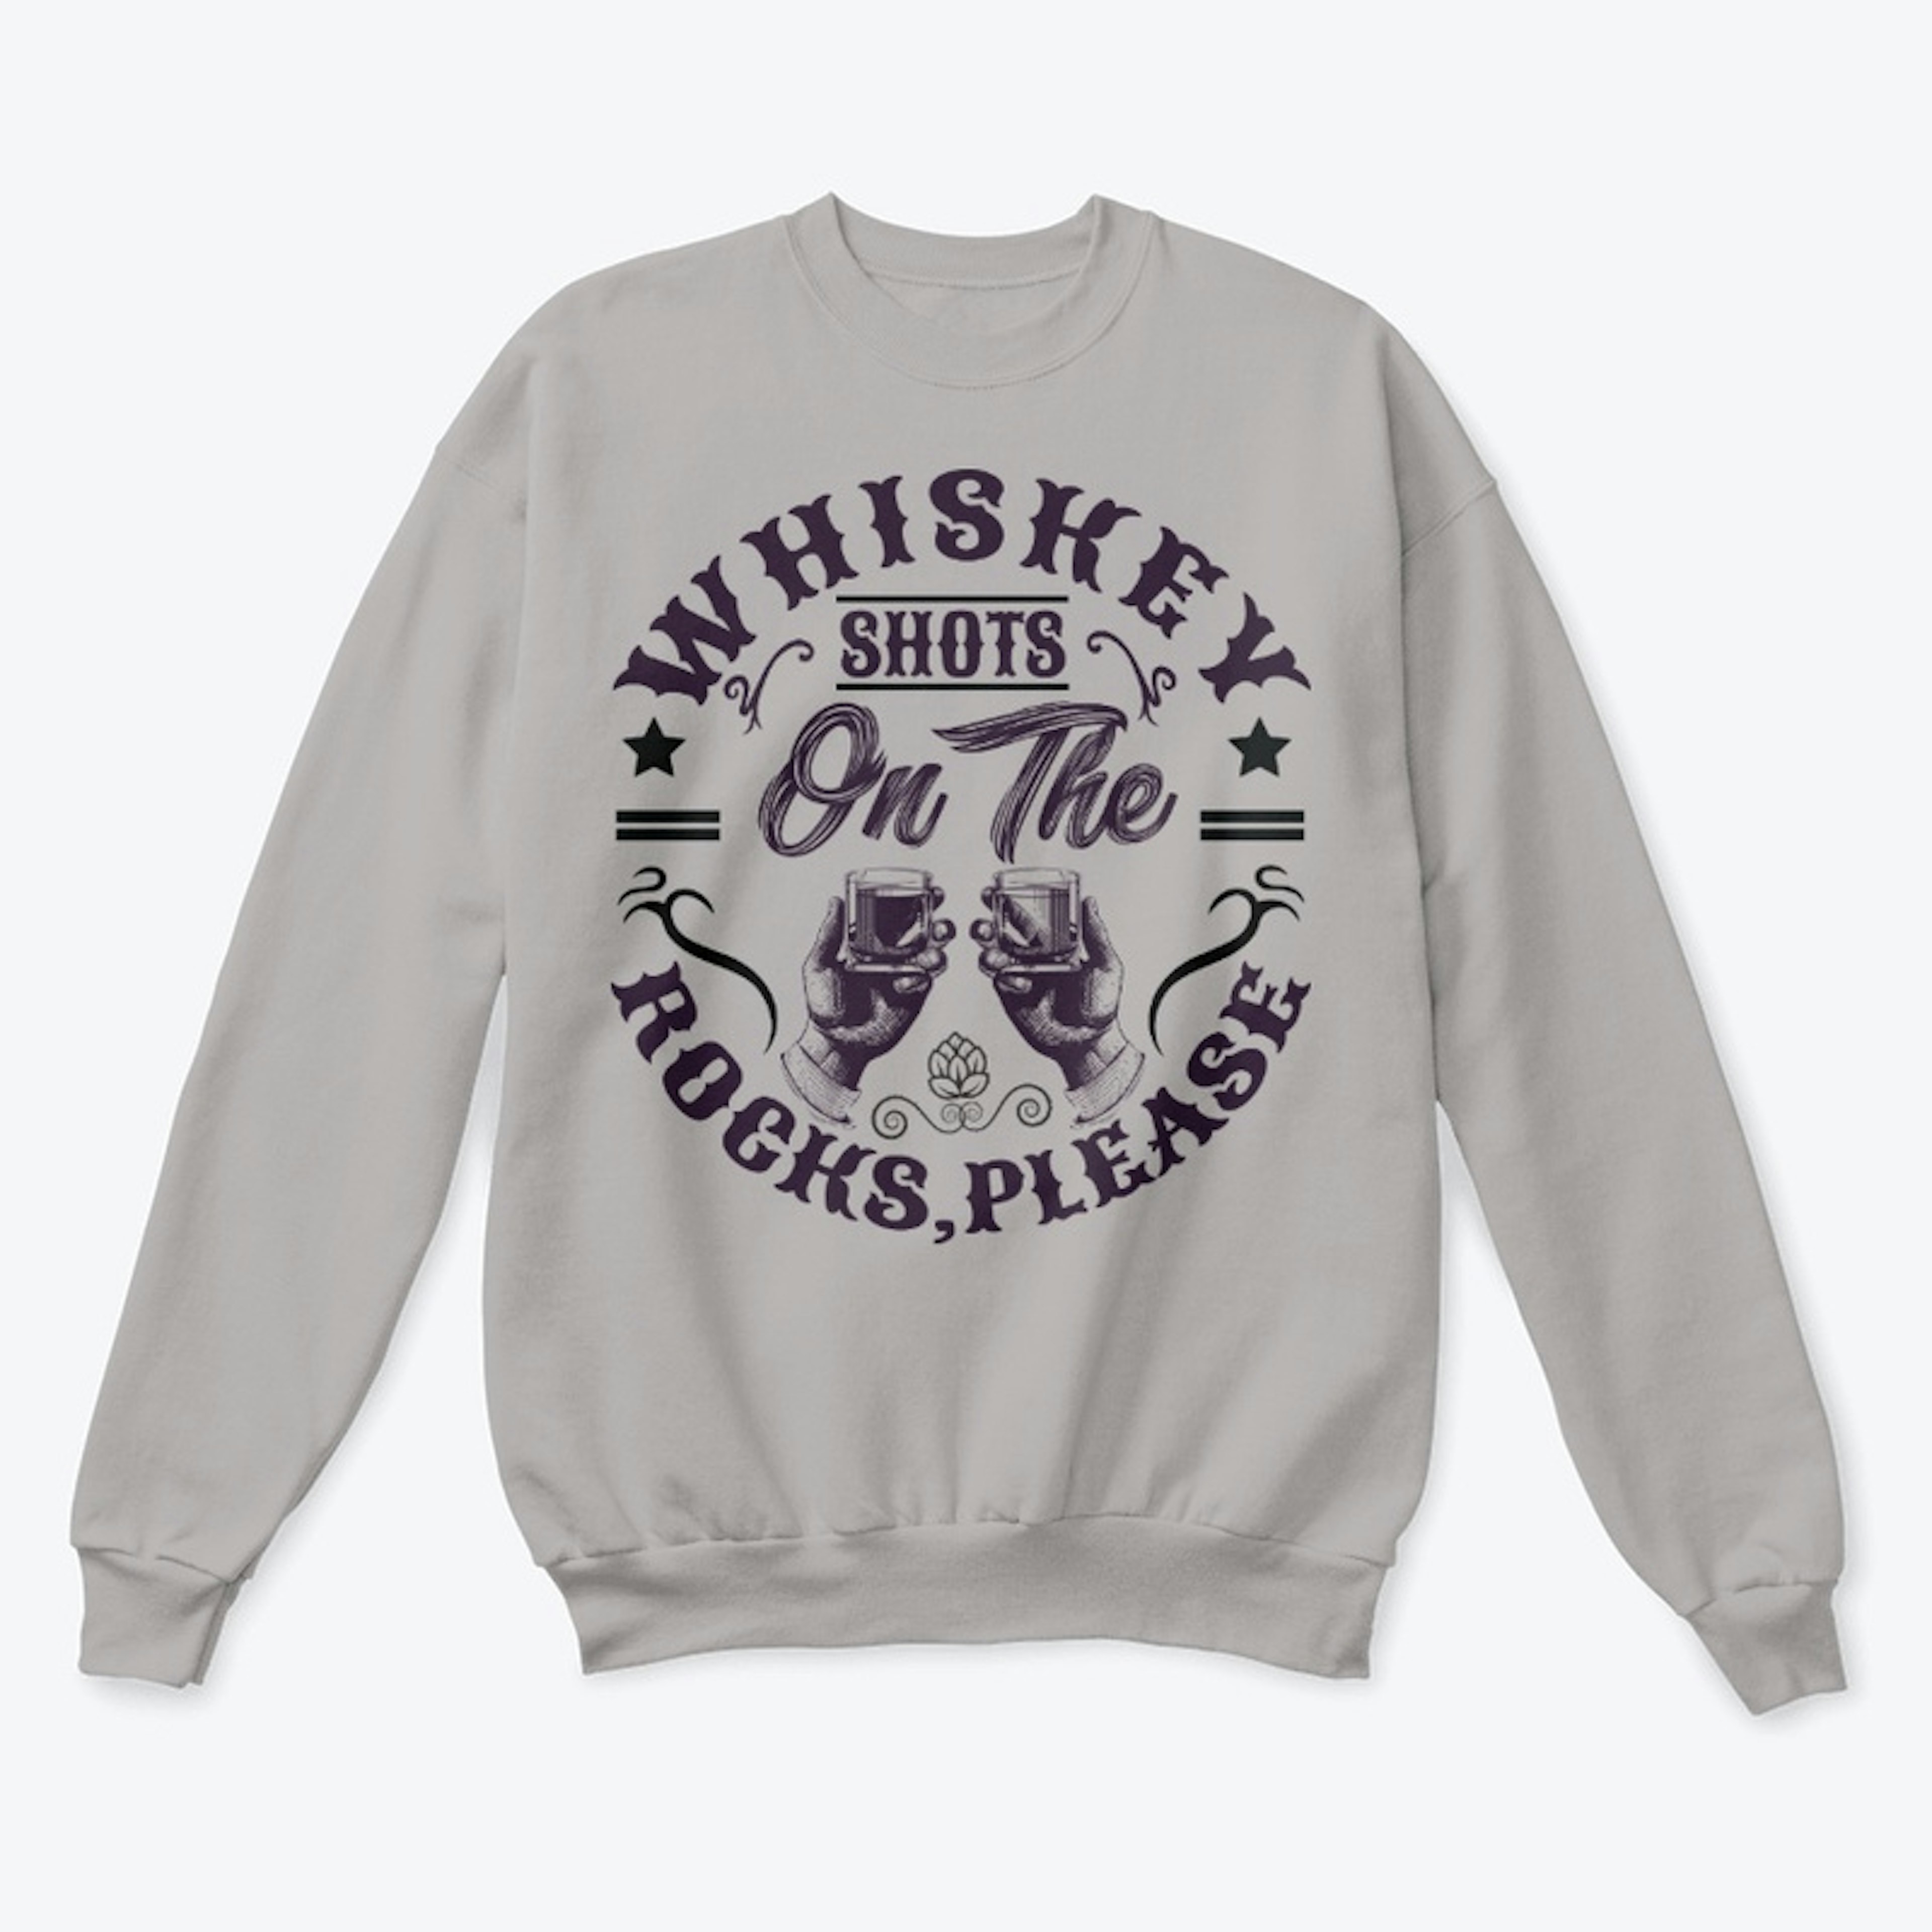 Whiskey Shots On The Rocks Please.